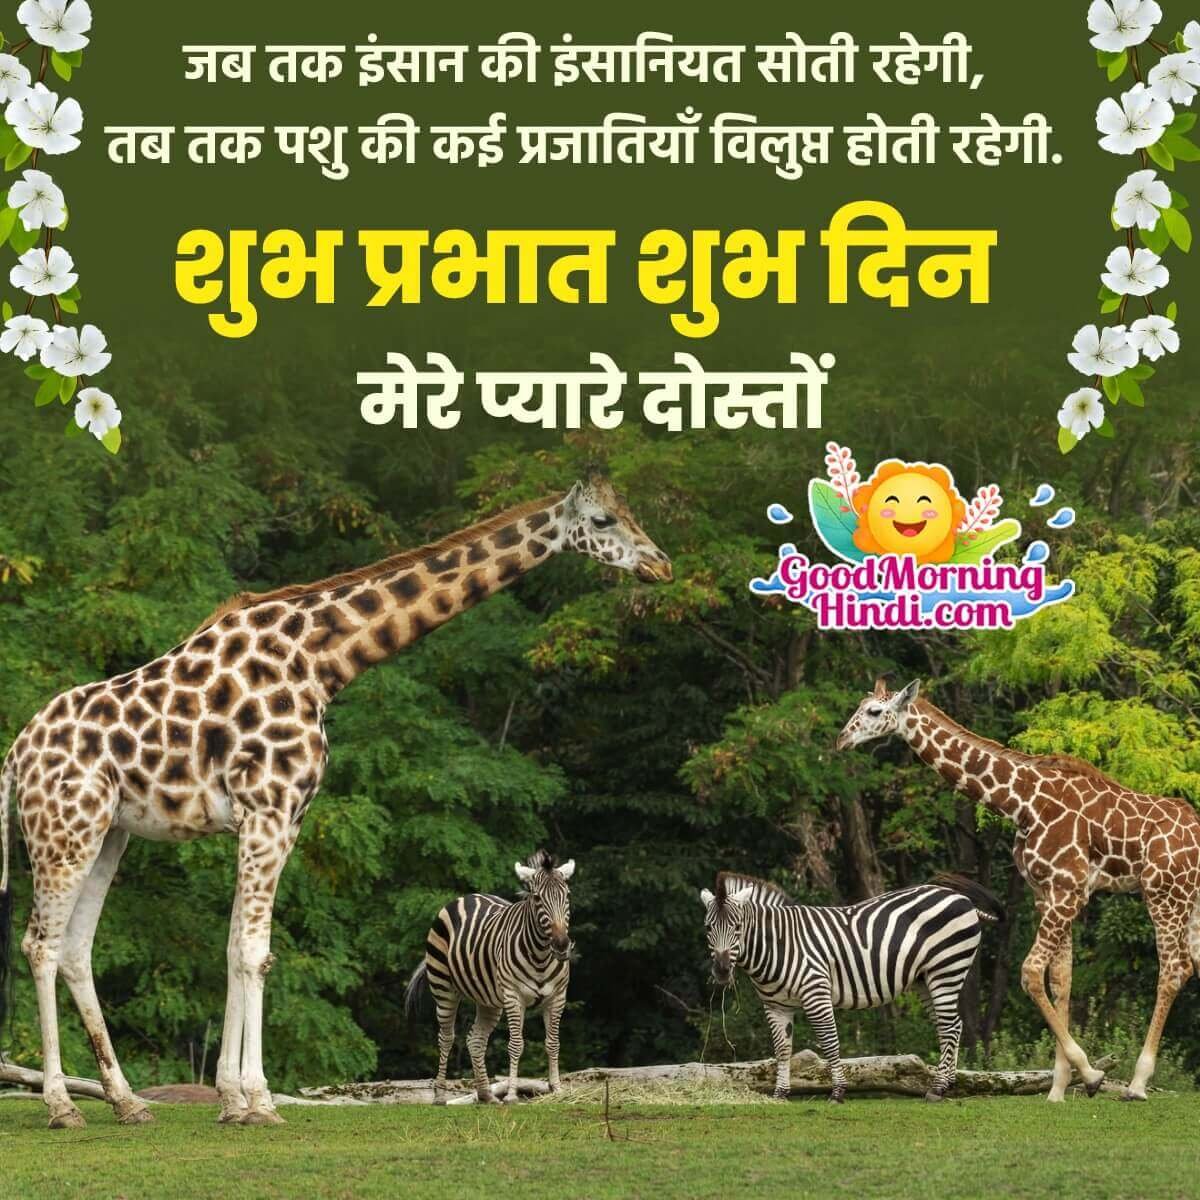 Good Morning Animal Hindi Quotes - Good Morning Wishes & Images In Hindi